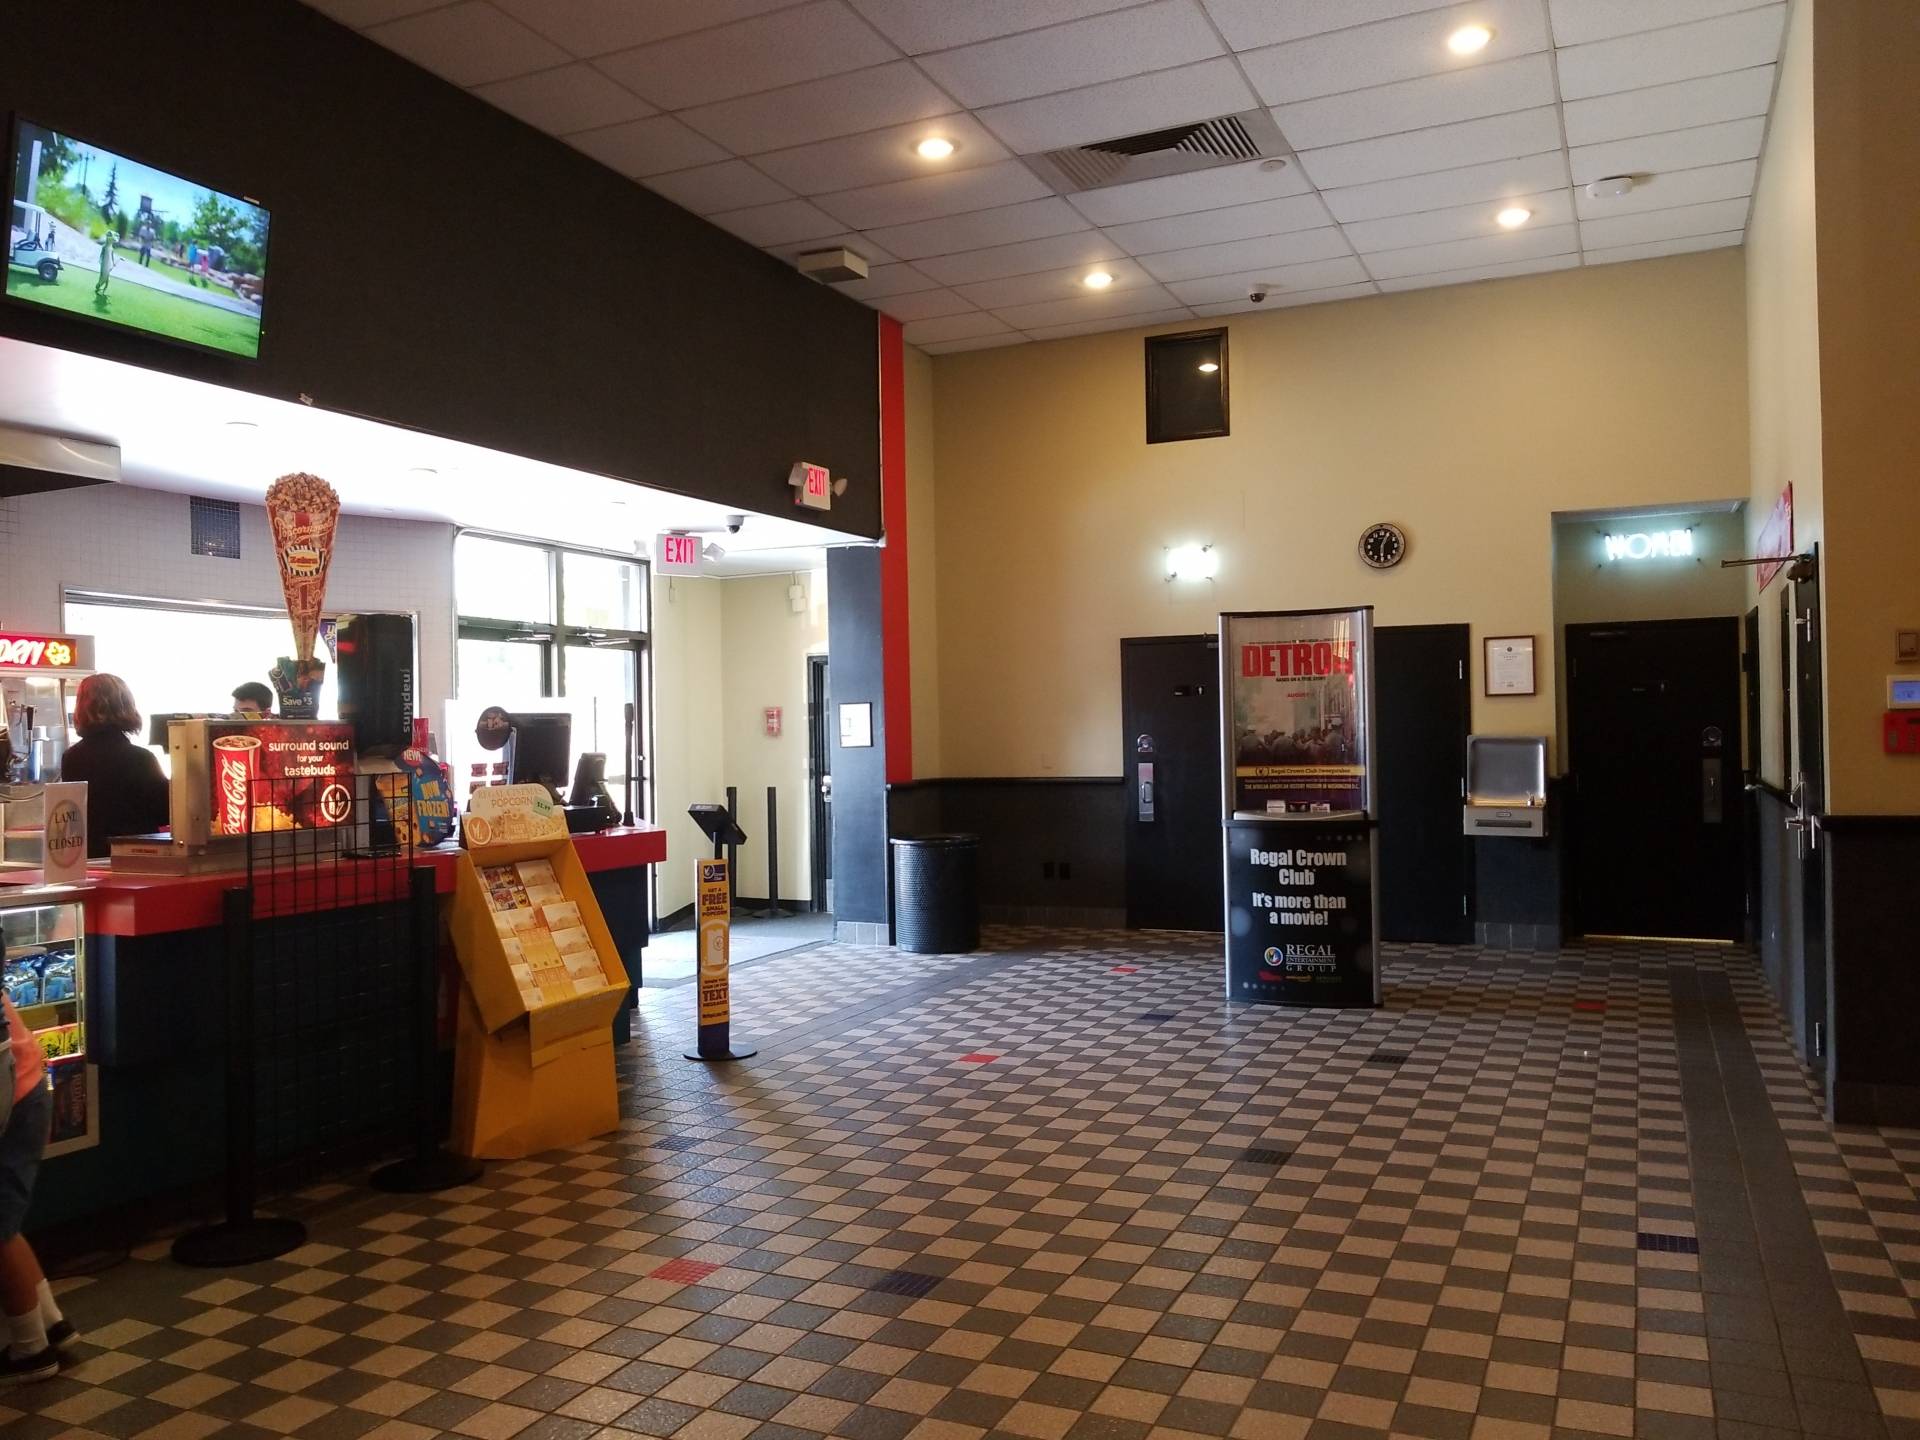 Regal Albany Cinemas